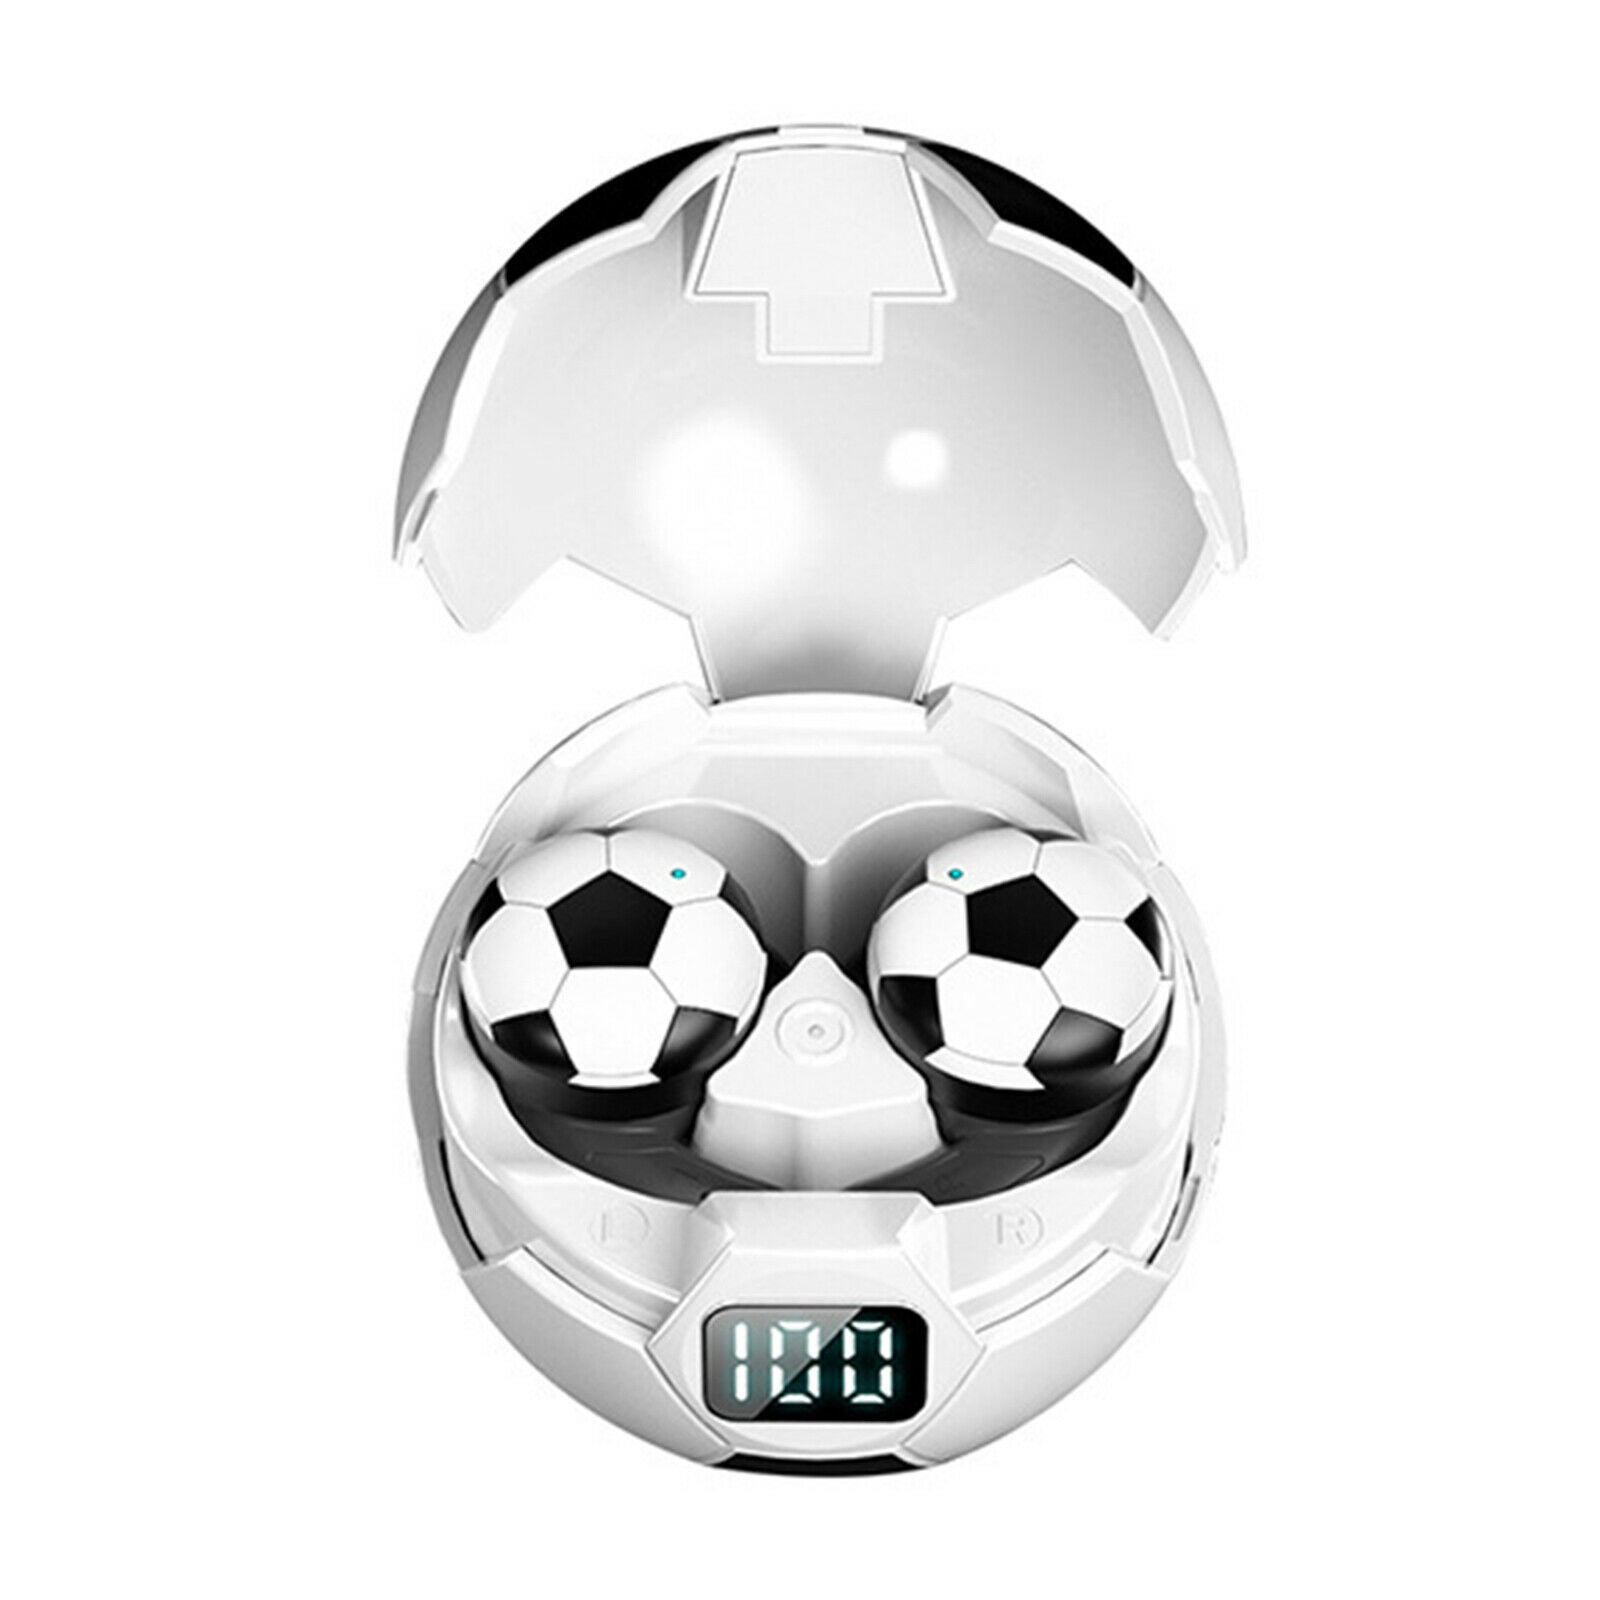 AQ009 Football Wireless Earphone Earbuds Sports Stereo Headphones Waterproof